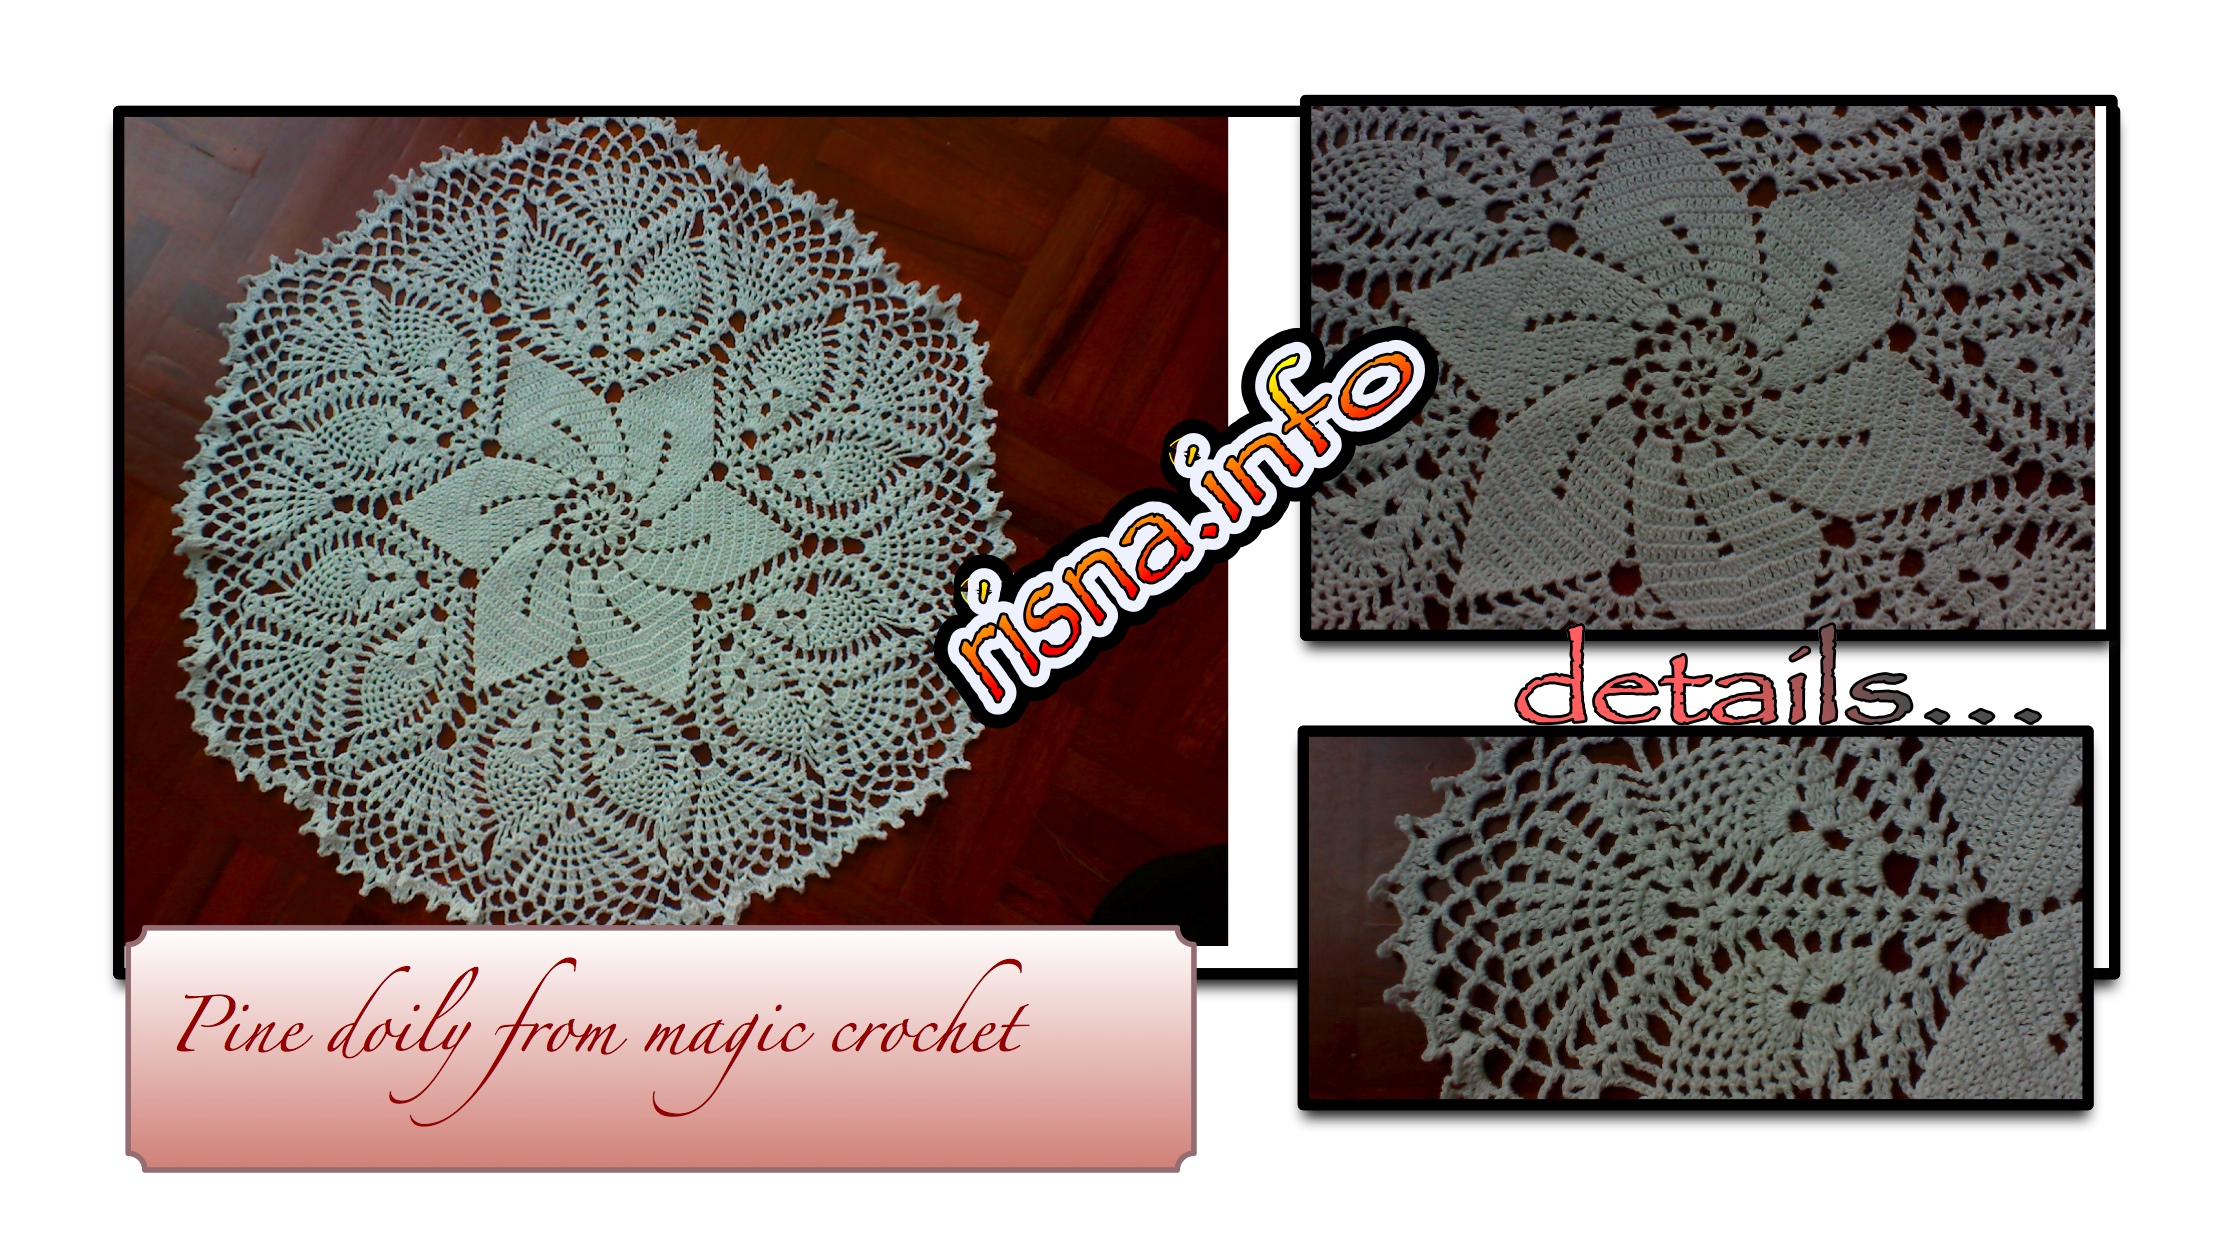 Crochet: Pine Doily from Magic Crochet